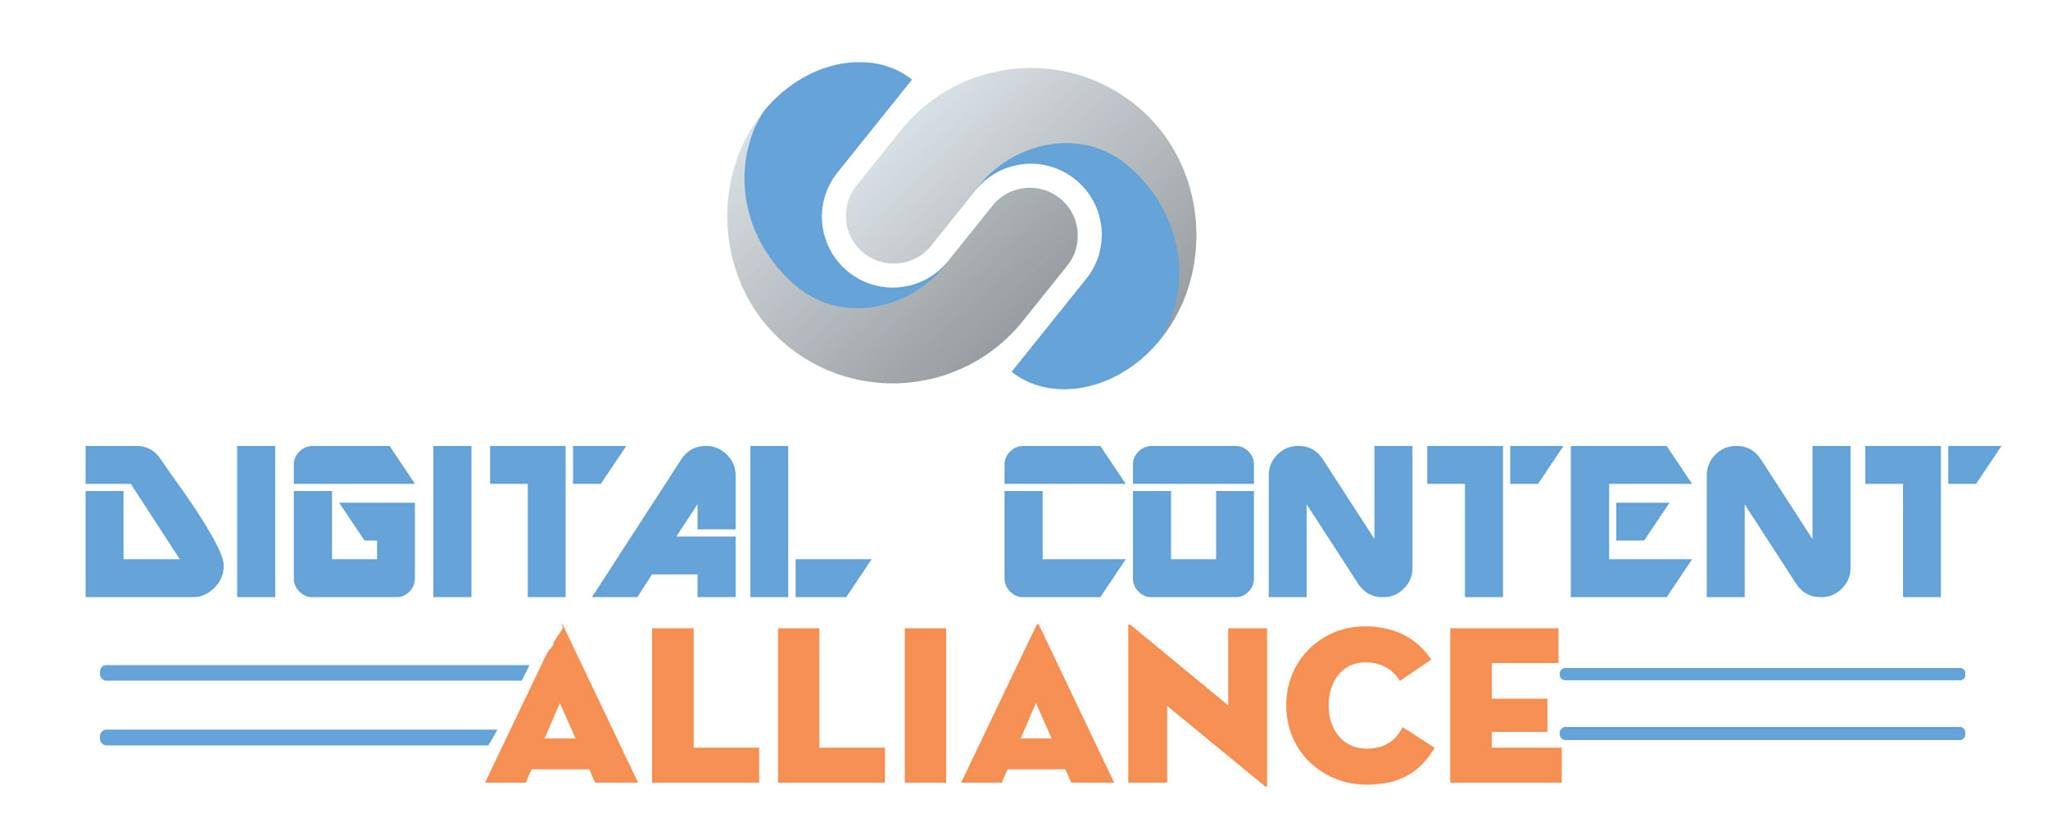 Digital Content Alliance Sdn. Bhd